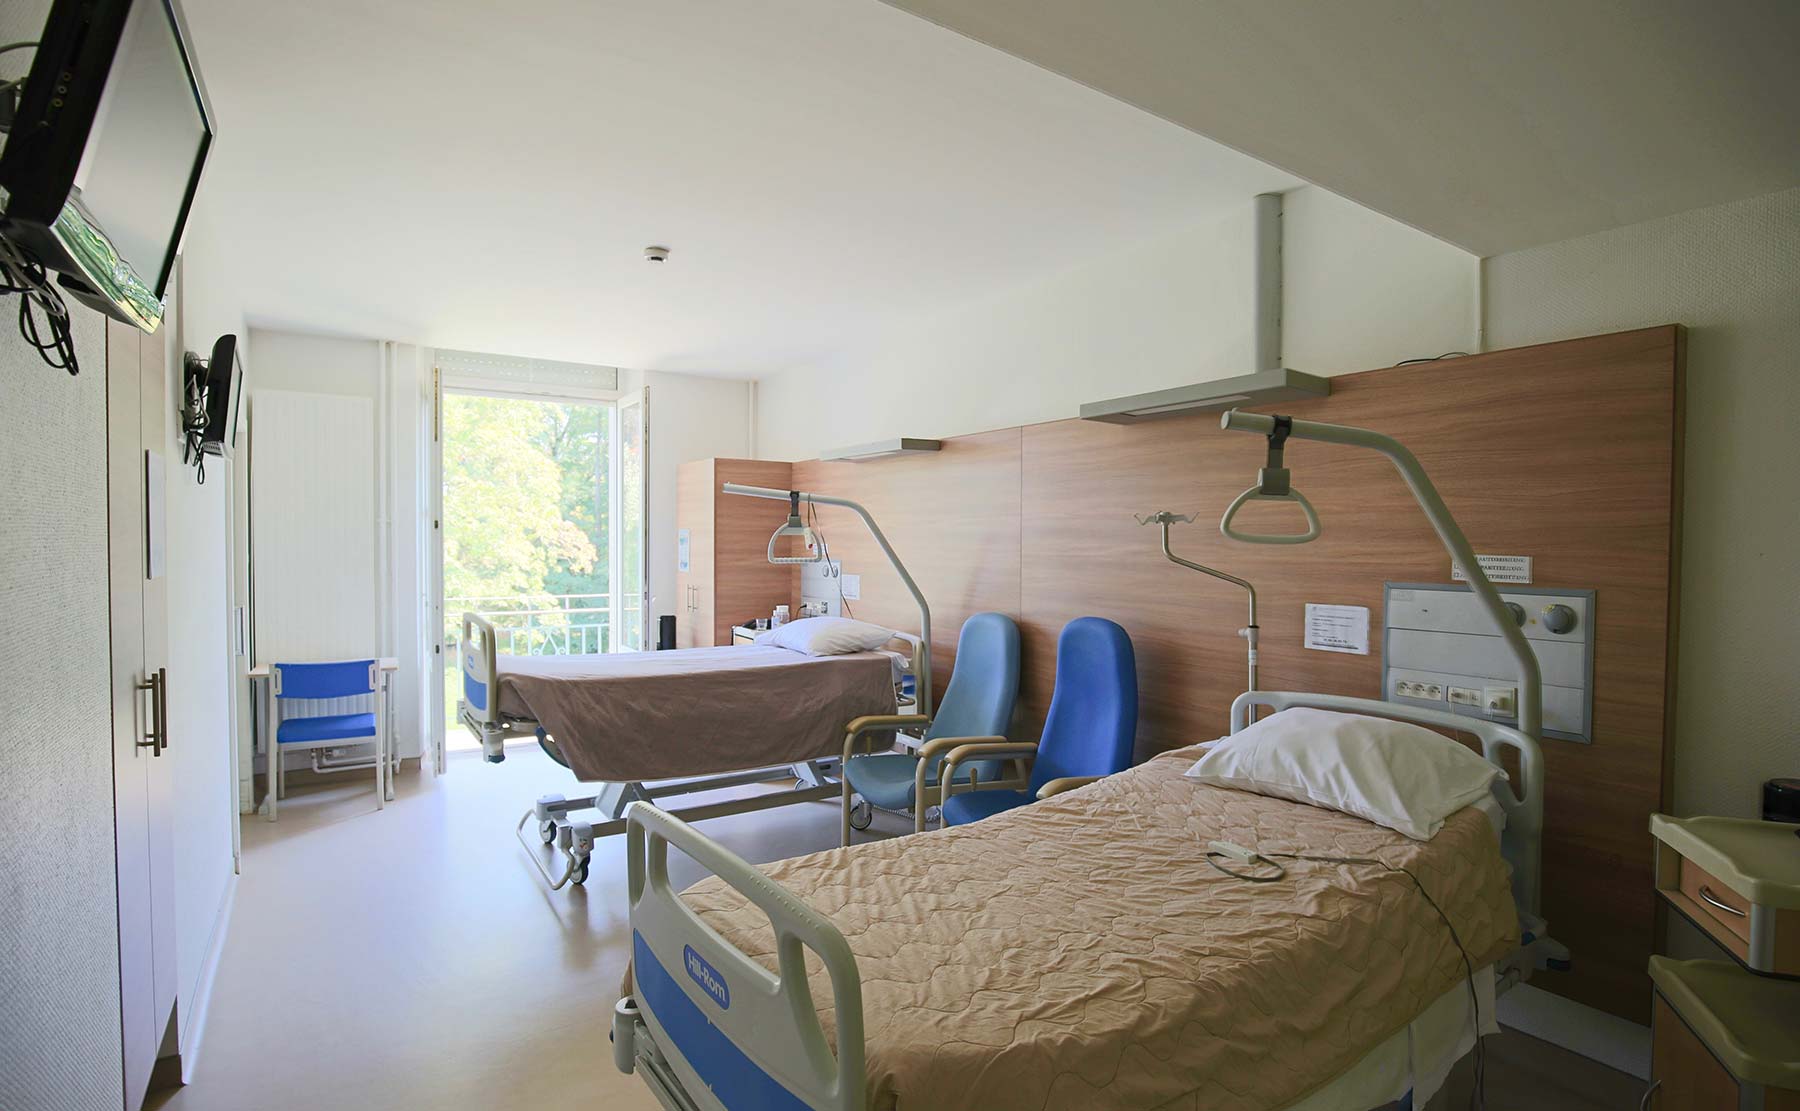  - Centre de convalescence Saint Jean / Sentheim